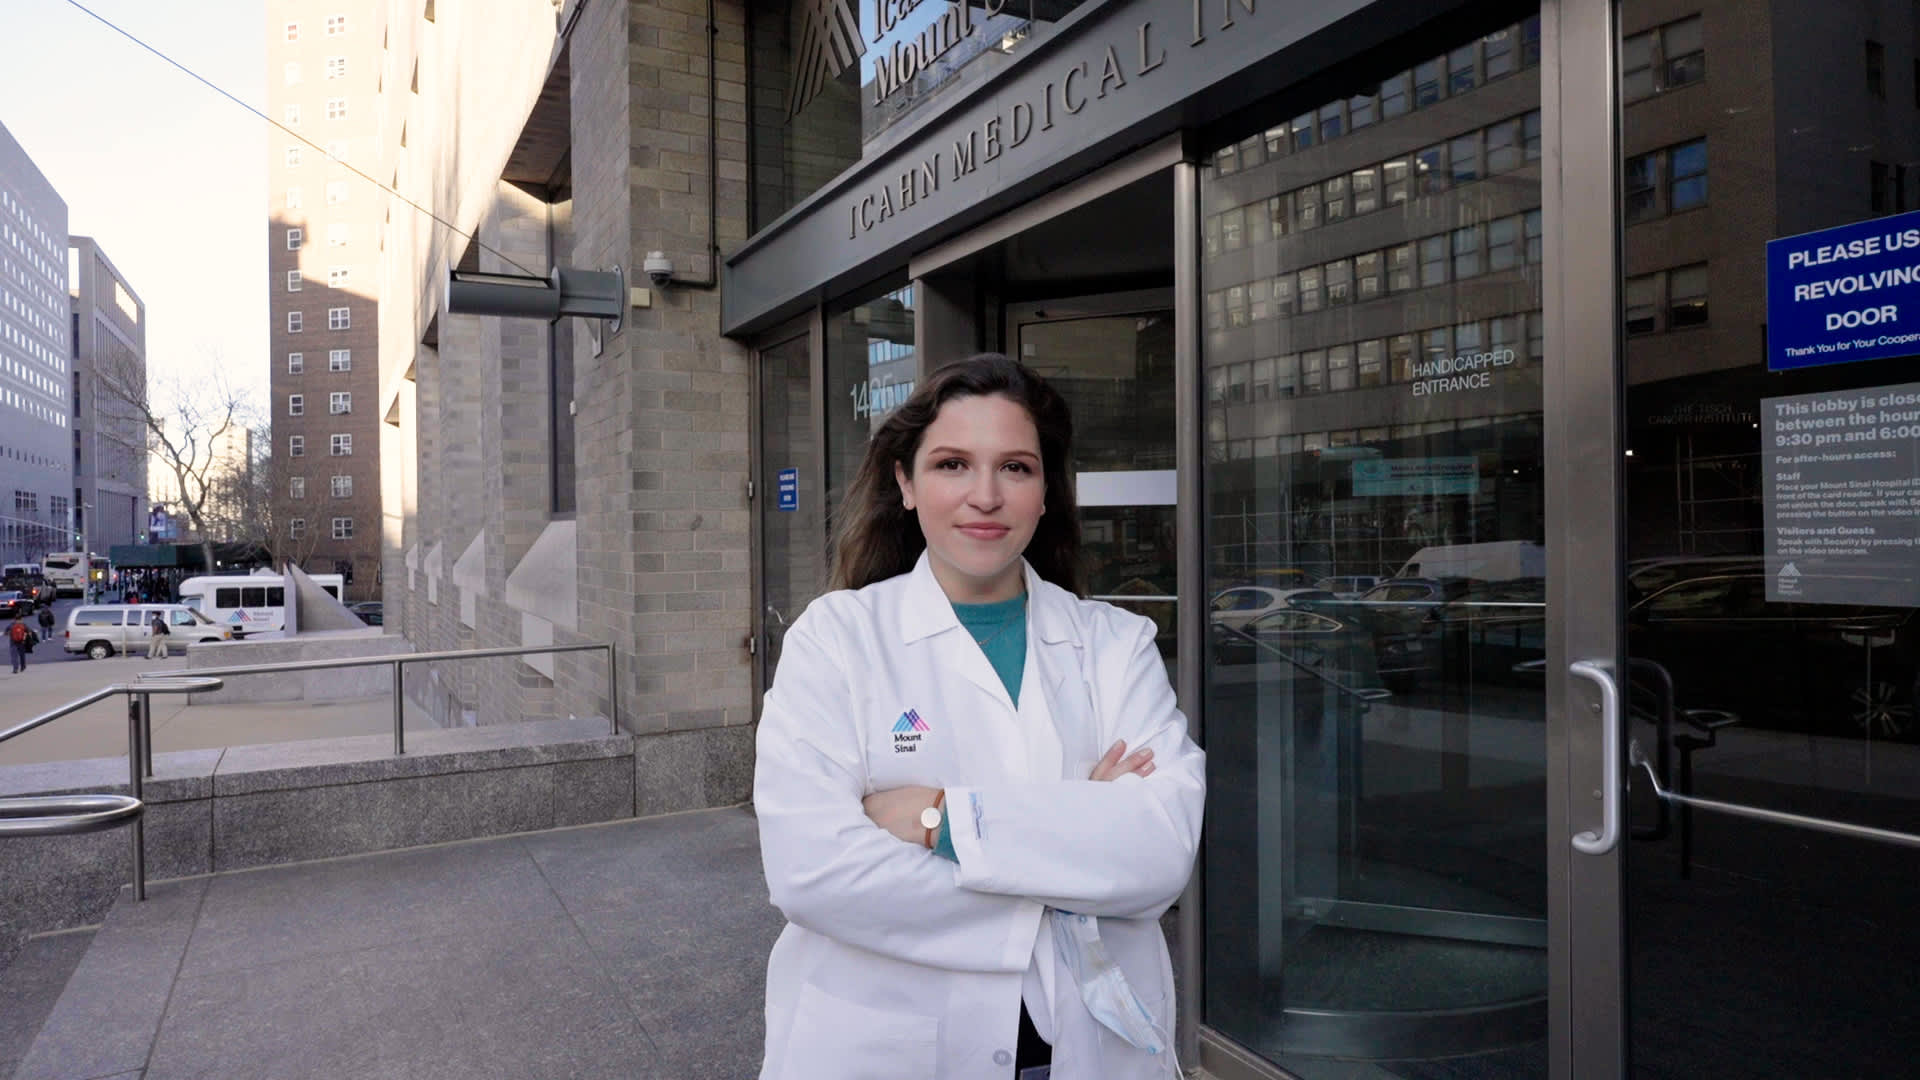 Alexandra Capellini attends the Icahn School of Medicine at Mount Sinai.